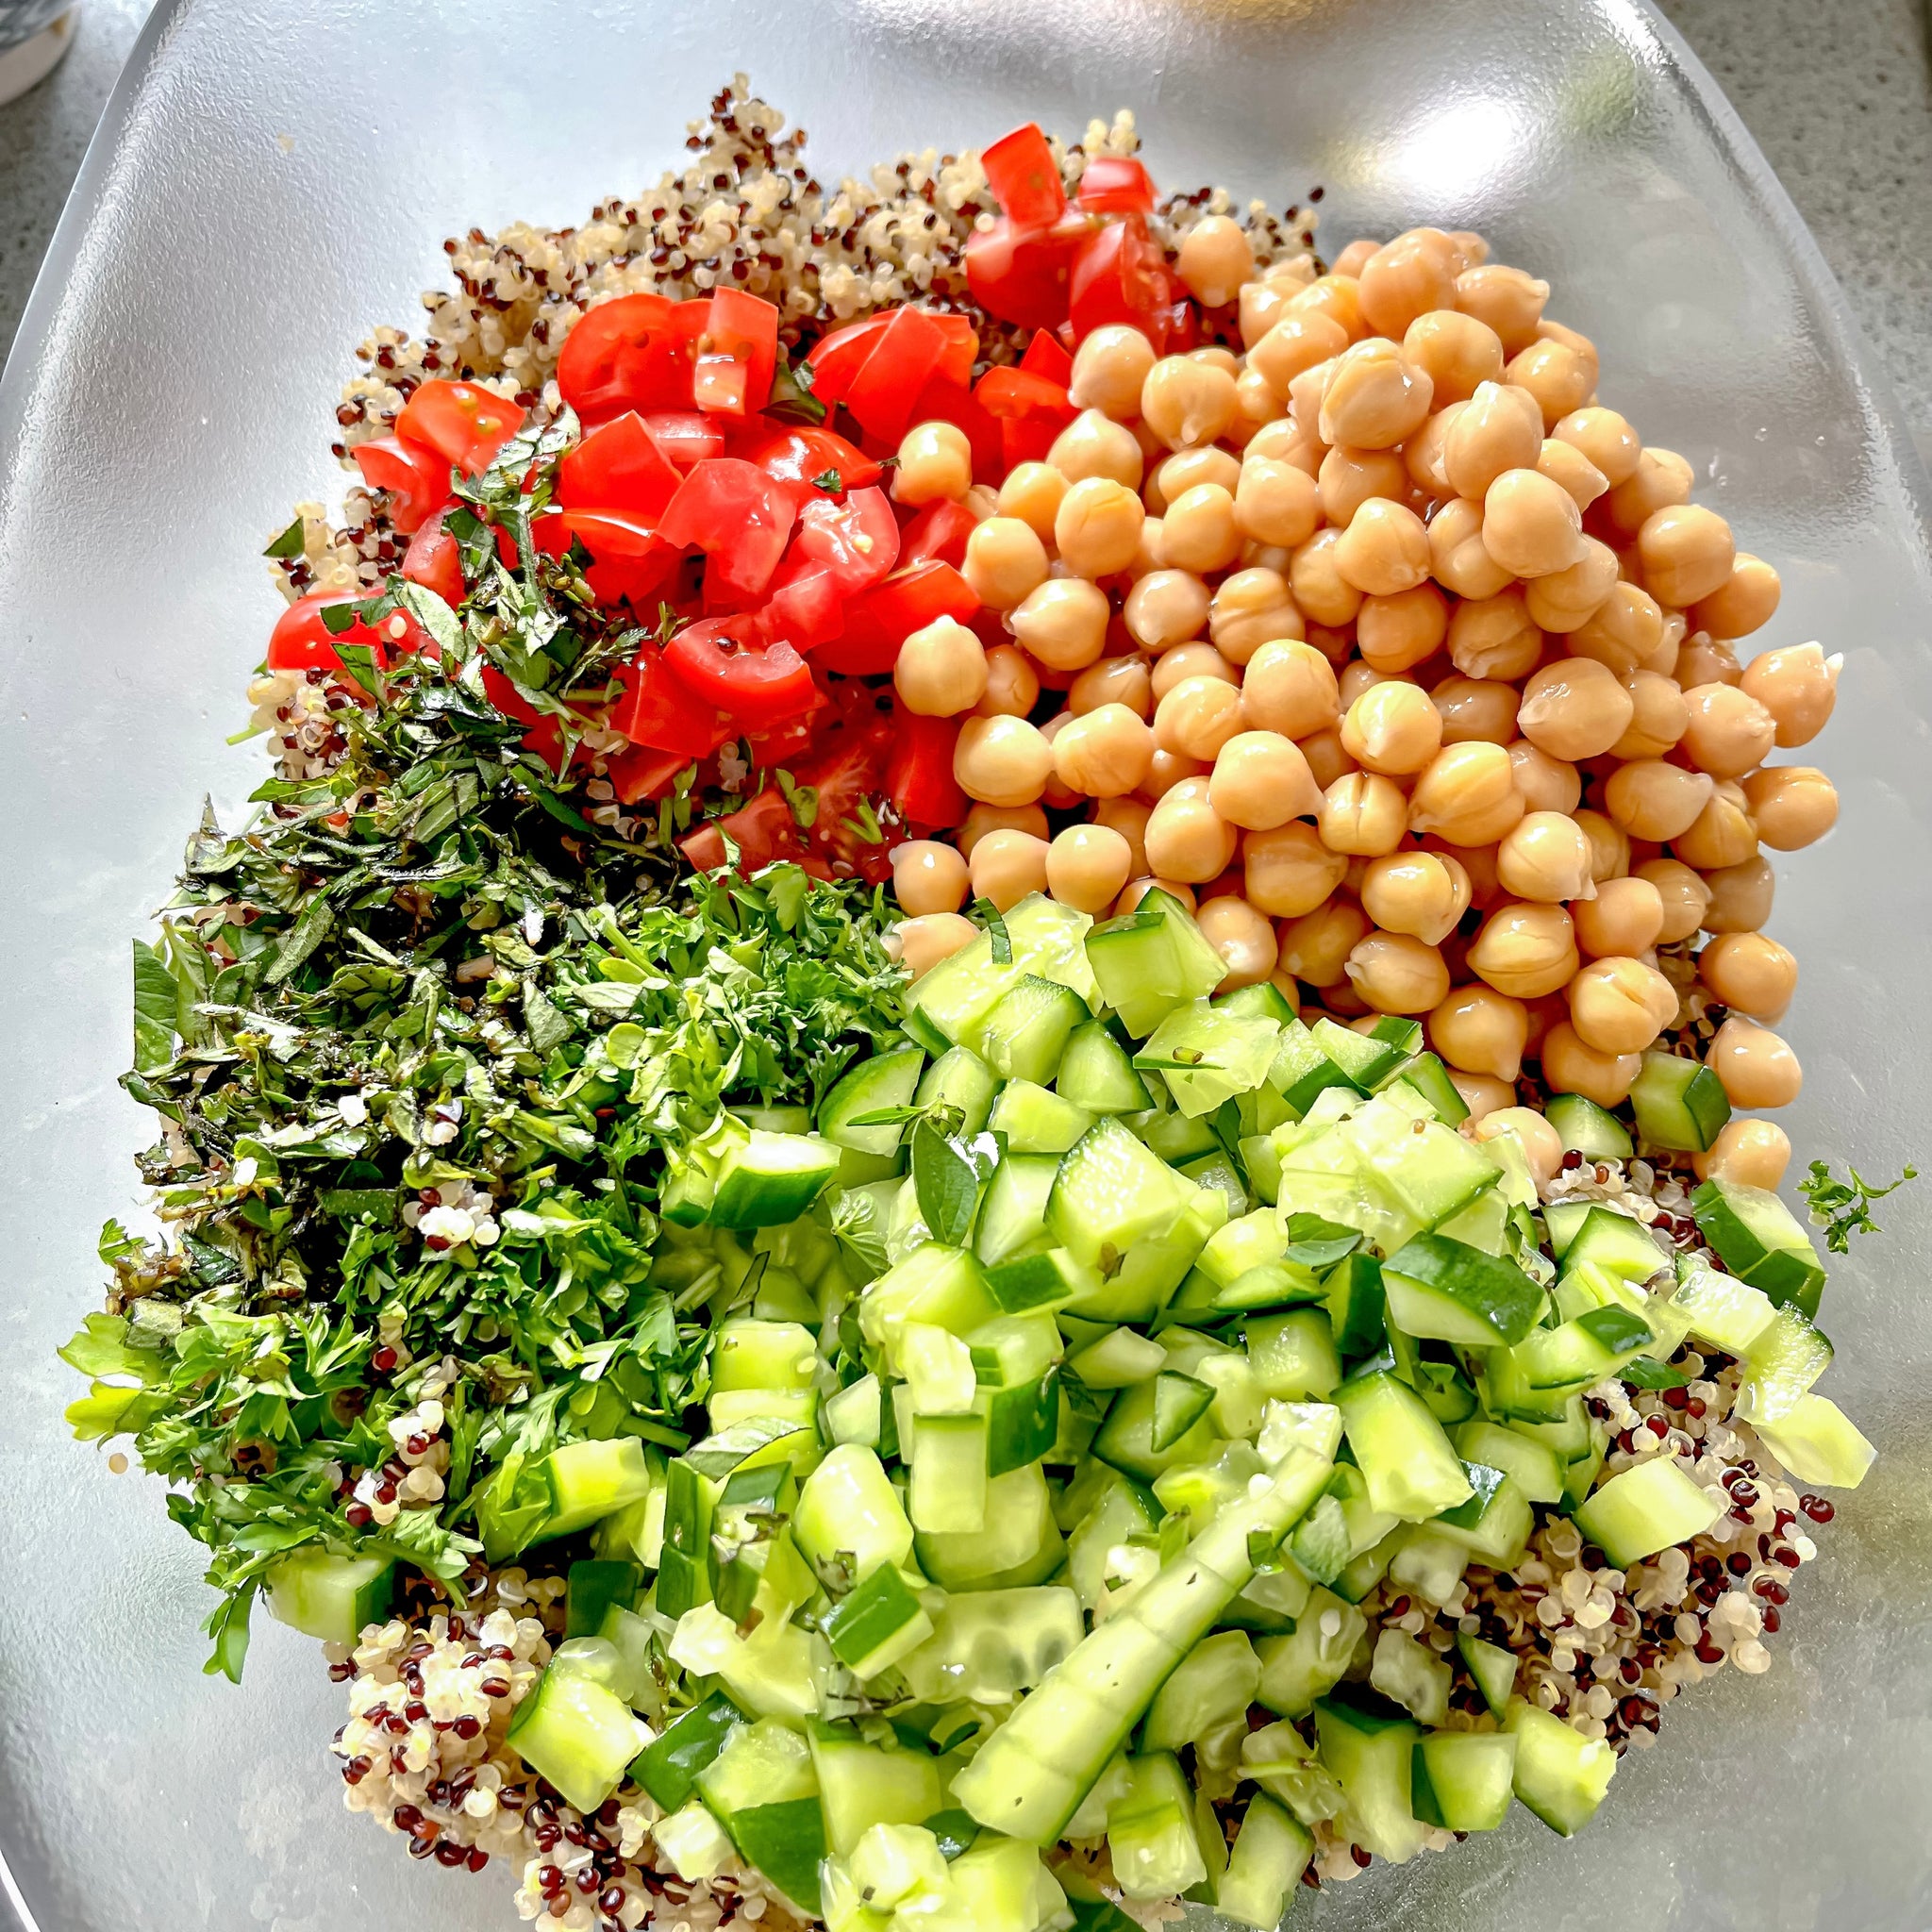 How to make Quinoa Salad at home 